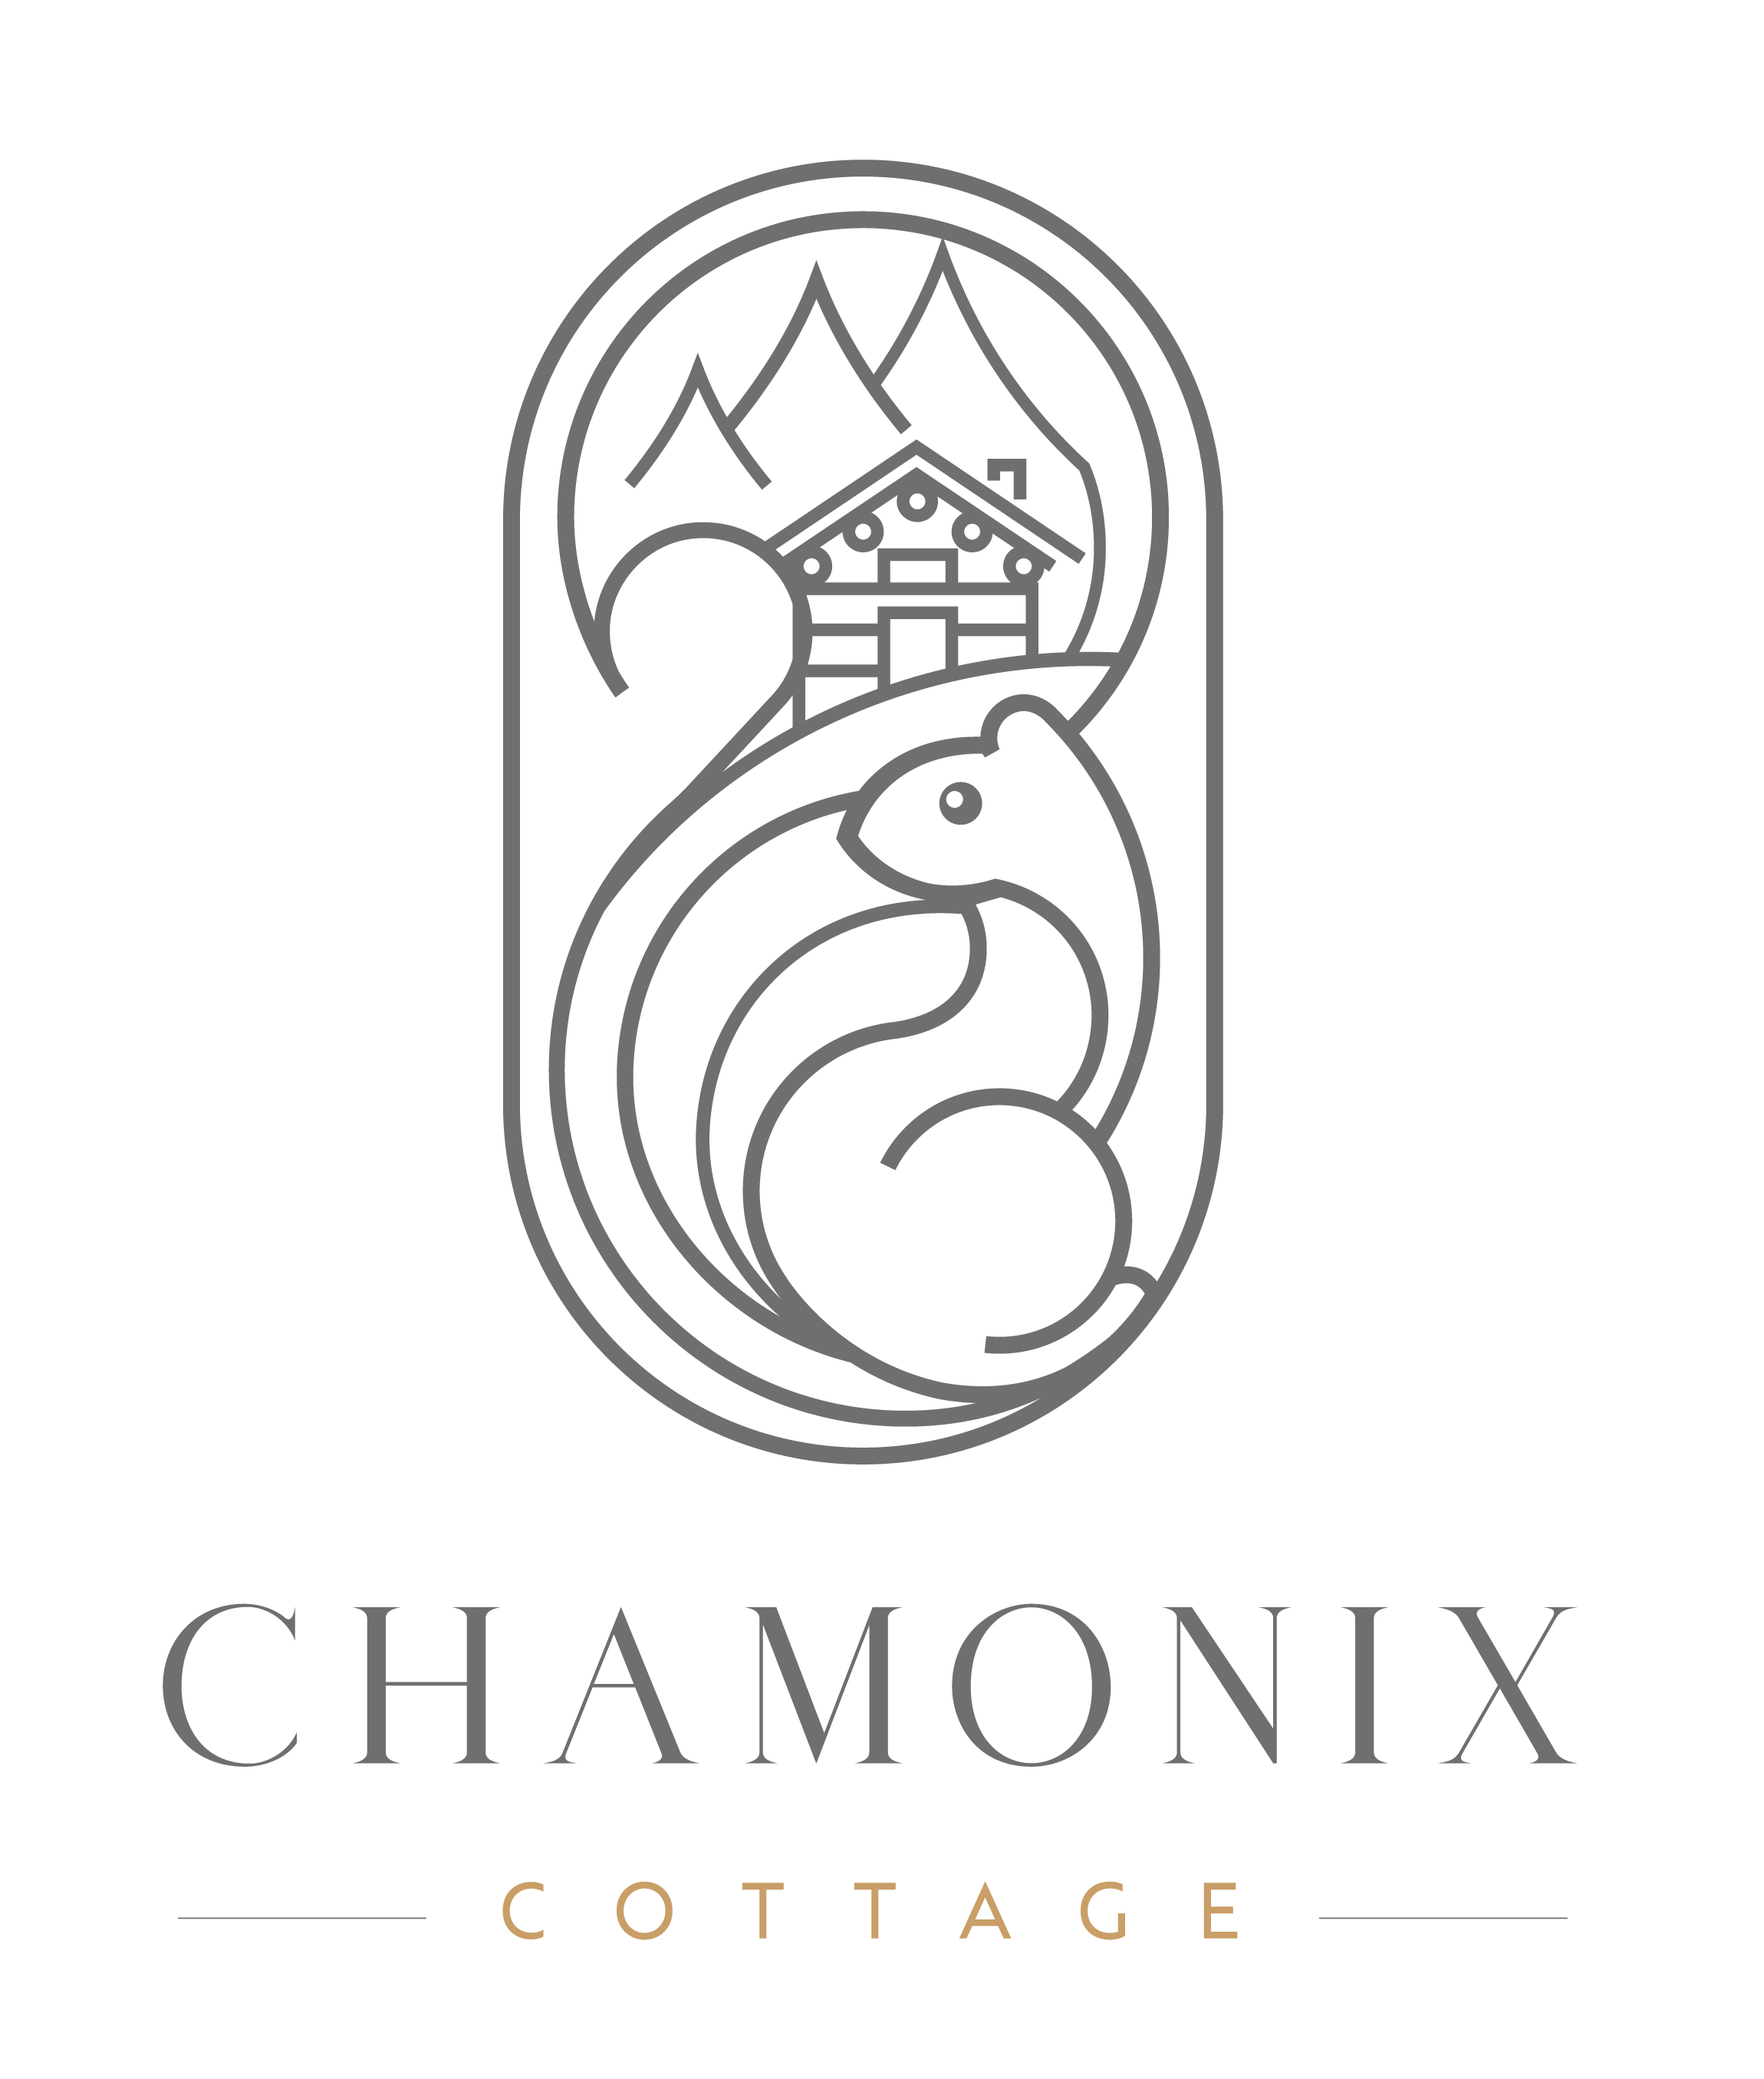 Chamonix Cottage | Contact - How to find us ? - Chamonix Cottage